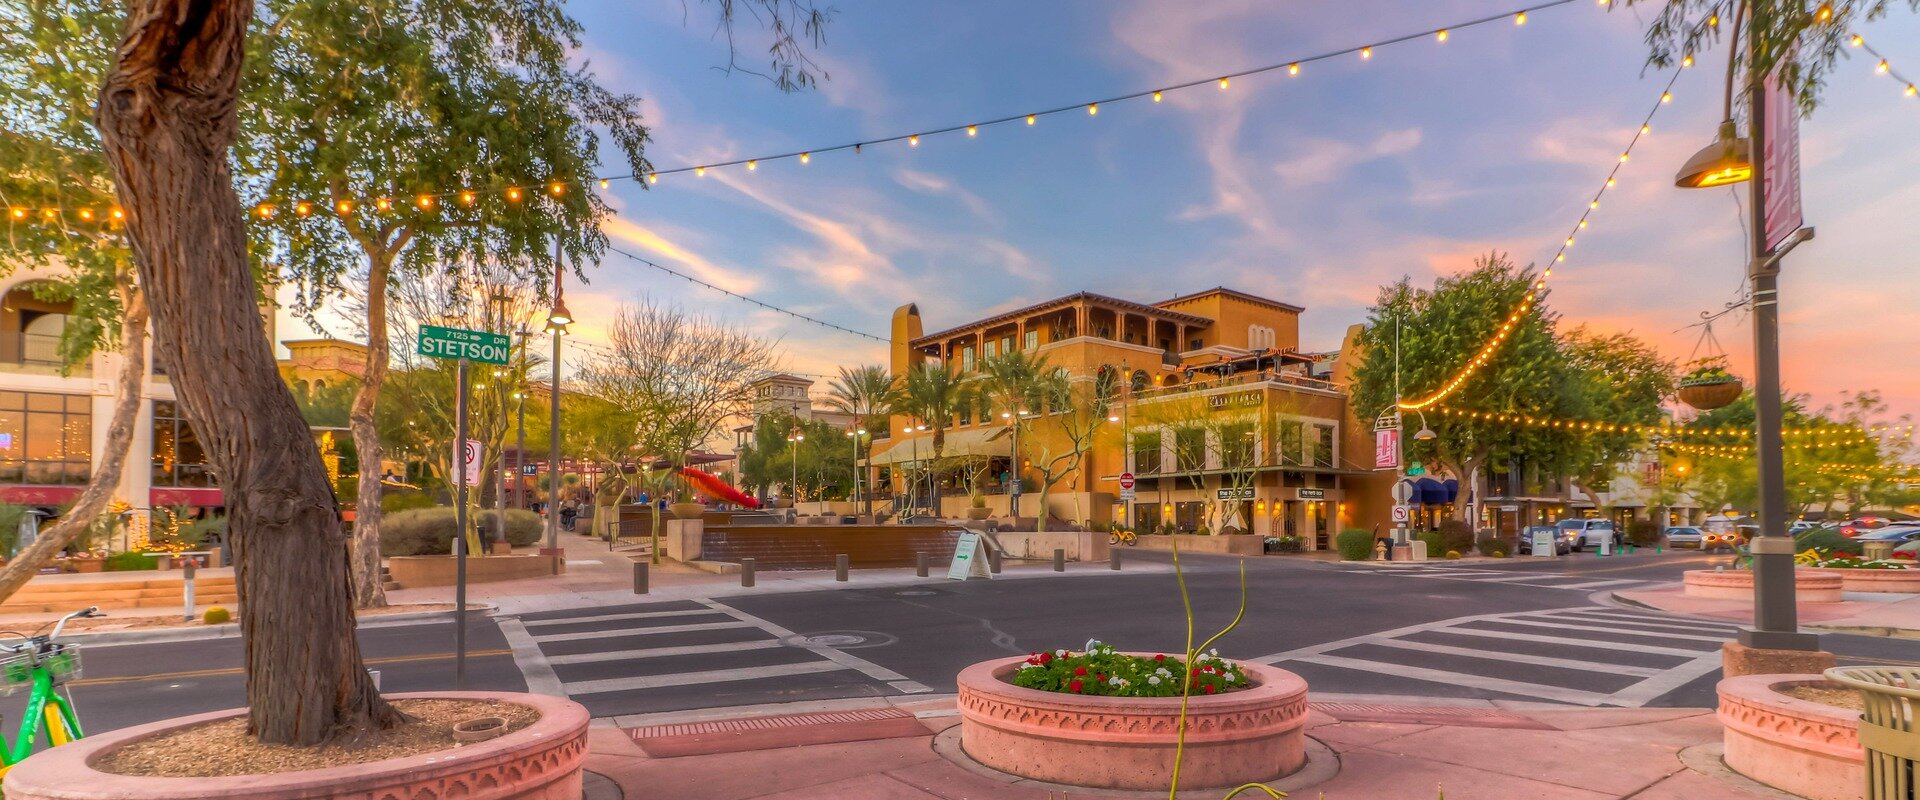 Scottsdale AZ Investment Properties - Reivesti Real Estate